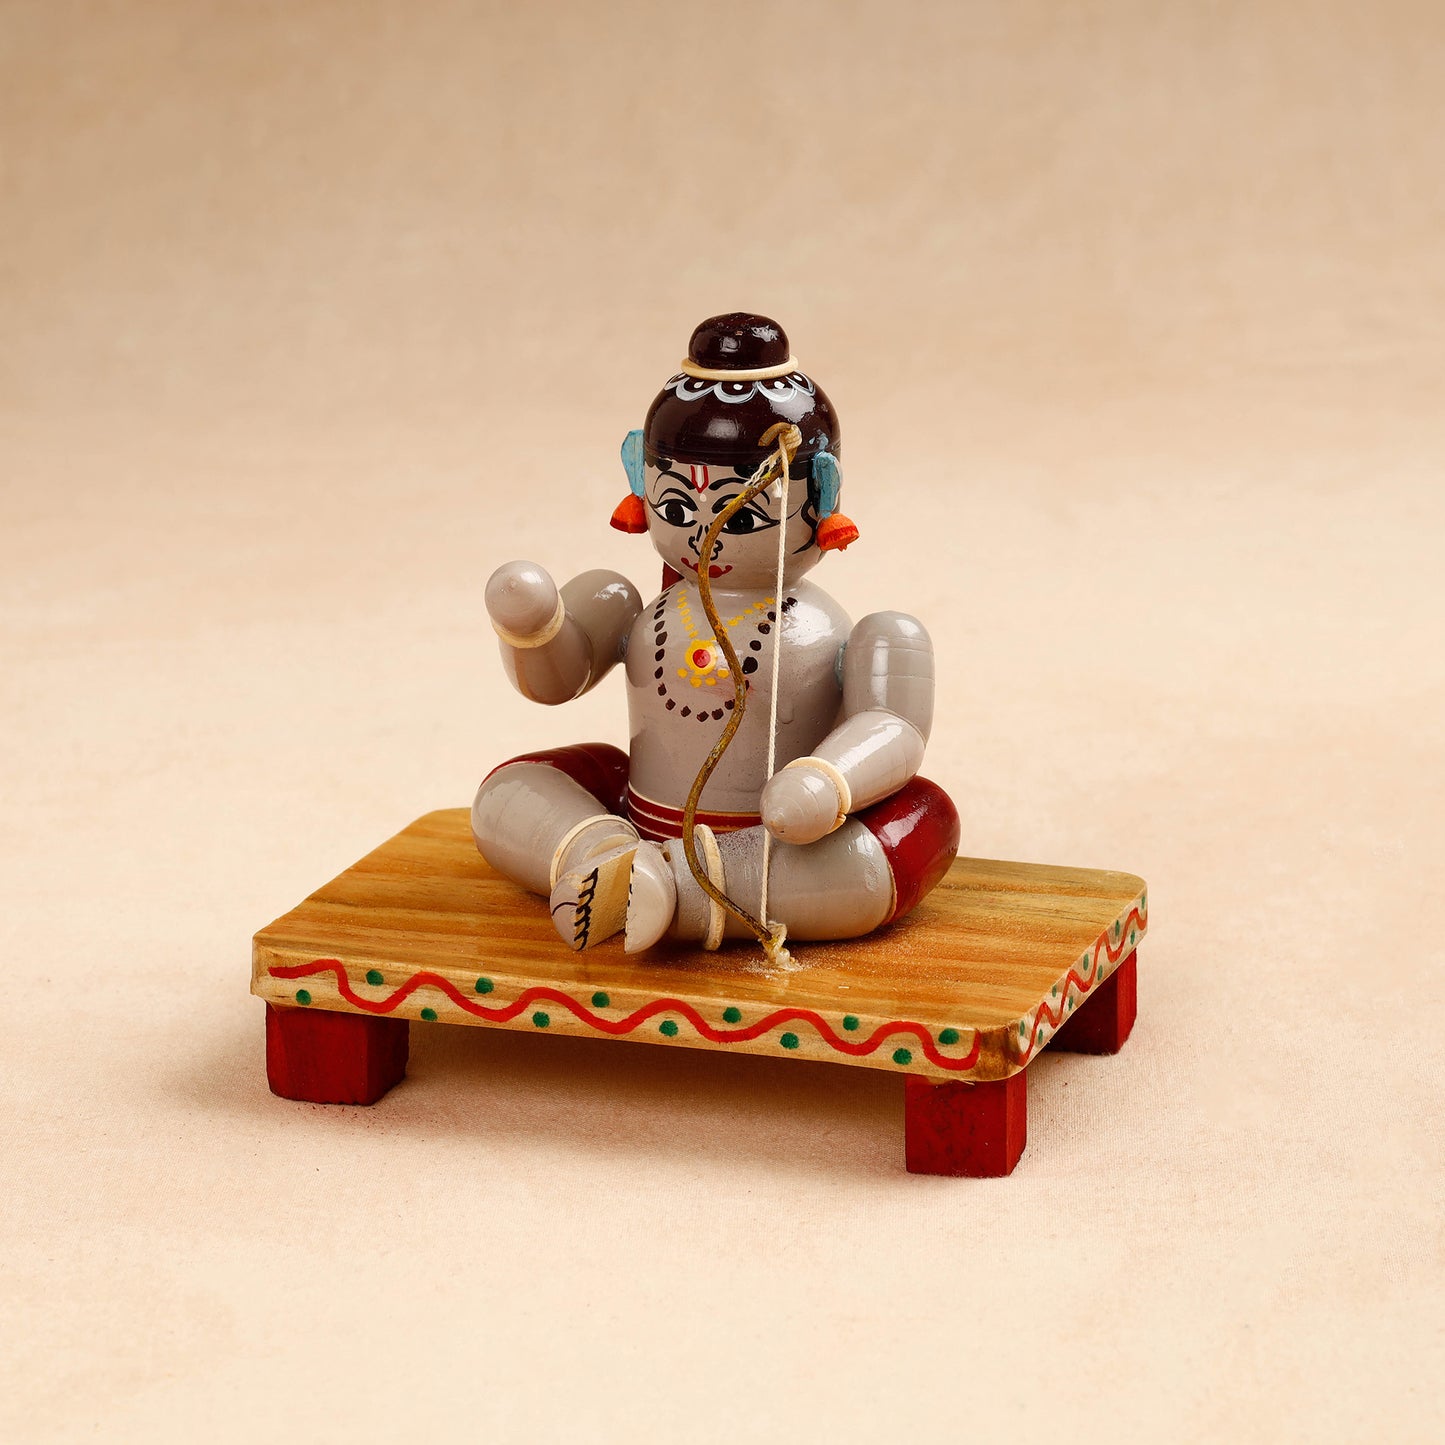 Bala Rama - Etikoppaka Handcrafted Wooden Idol